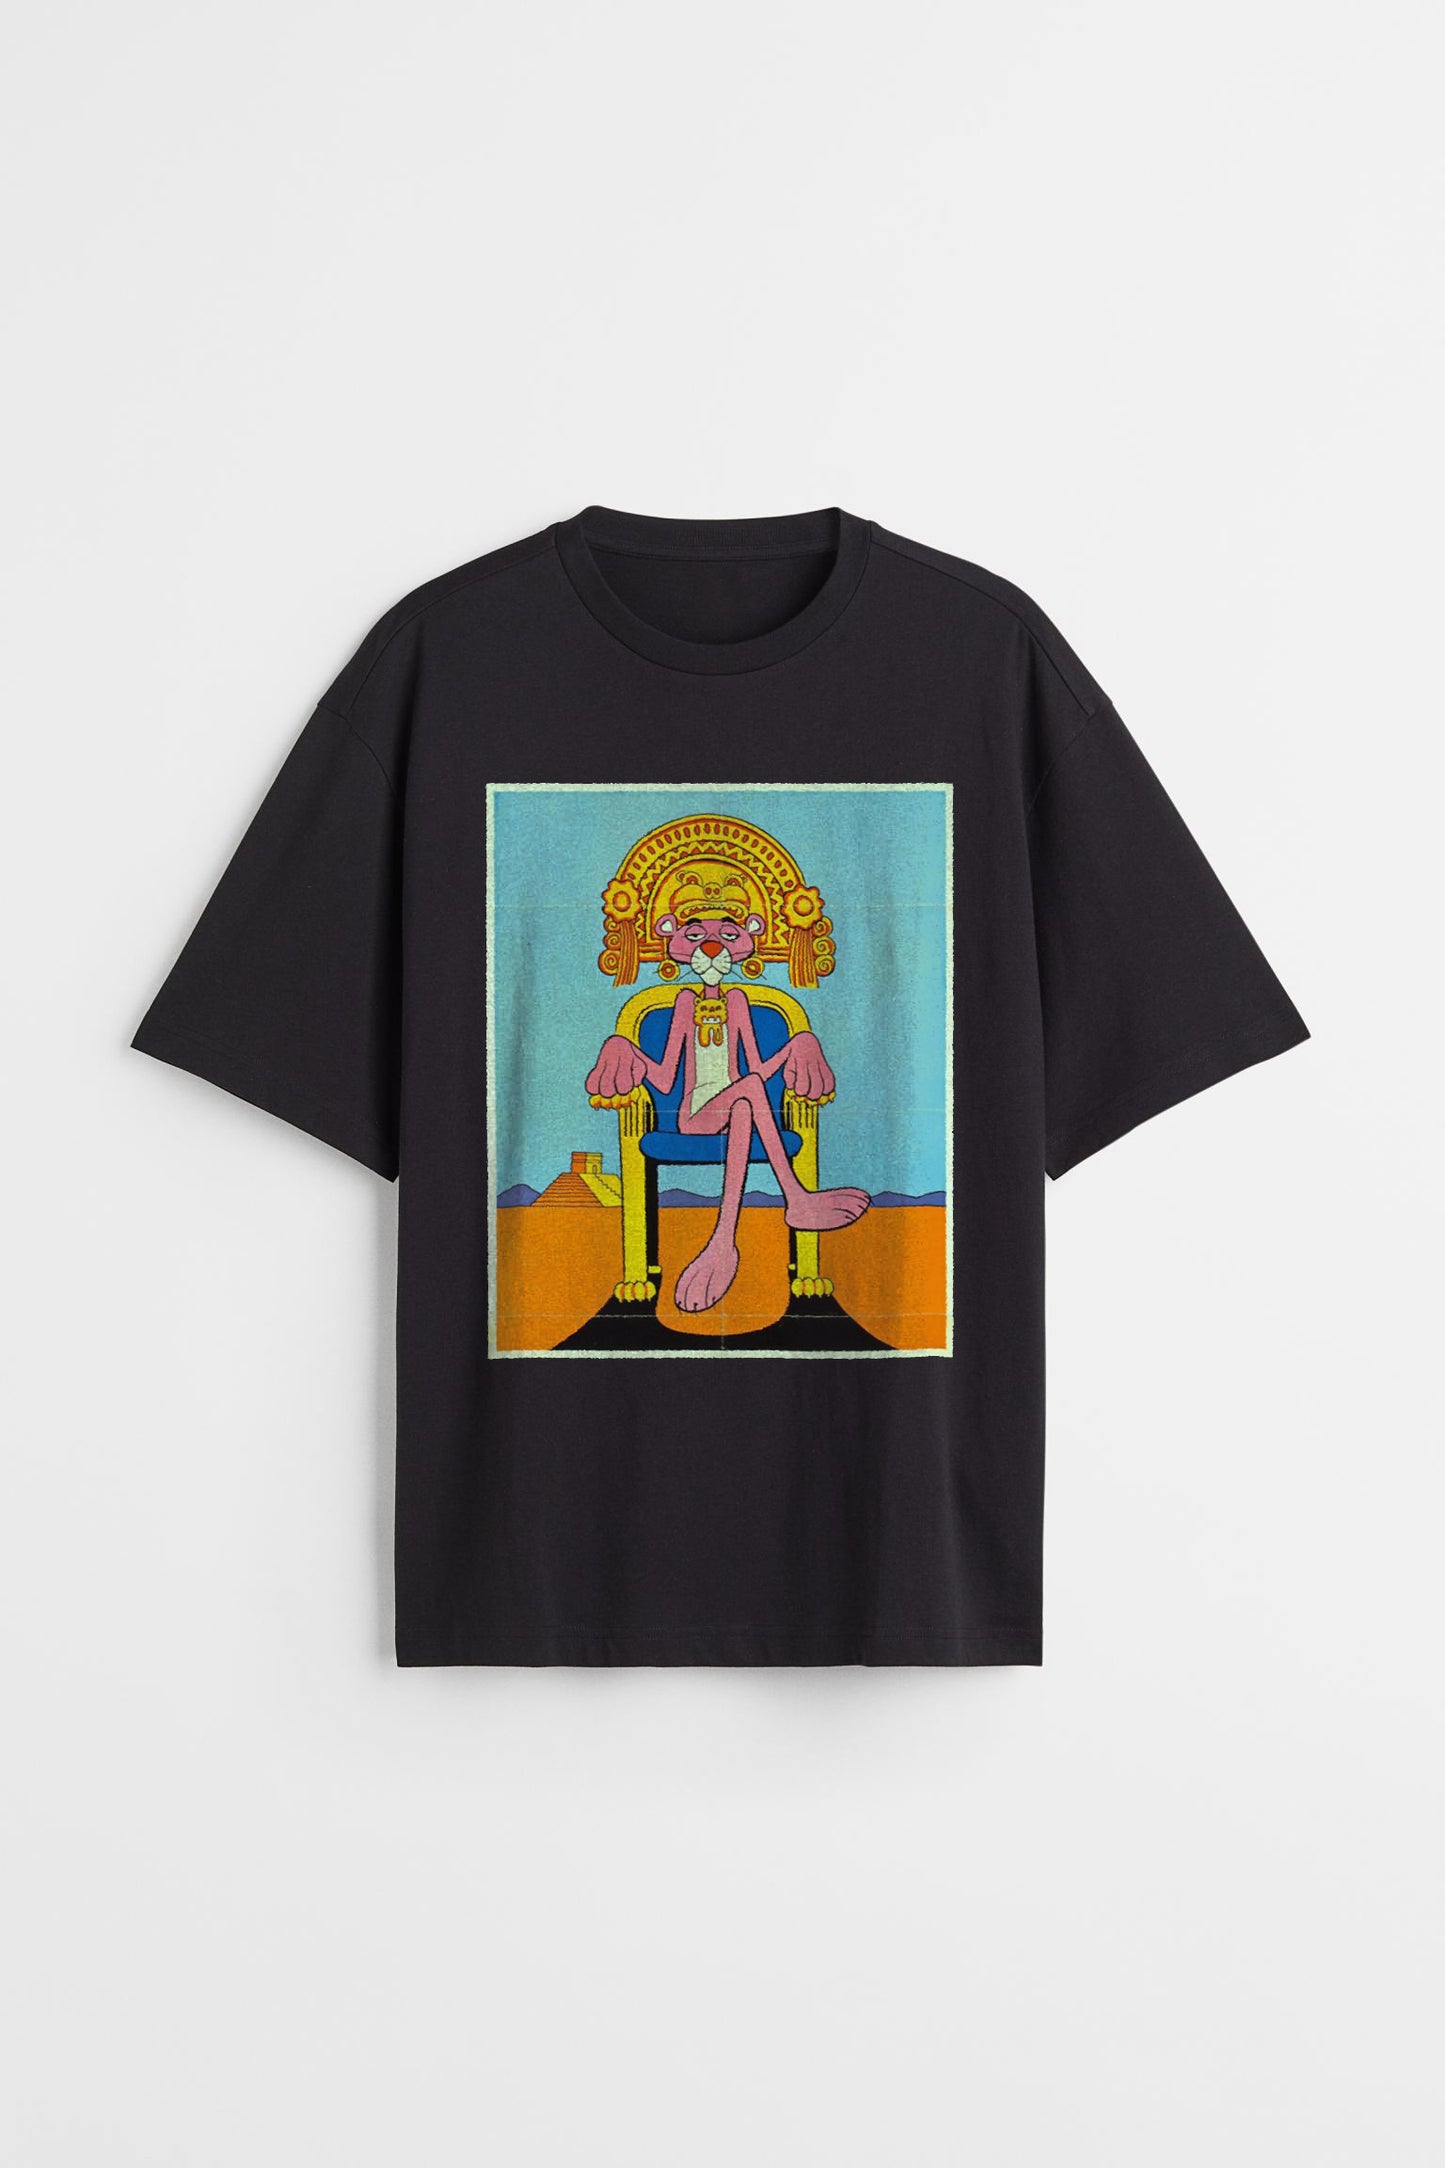 Kartoon Collection// Bink Banther oversized T-shirt